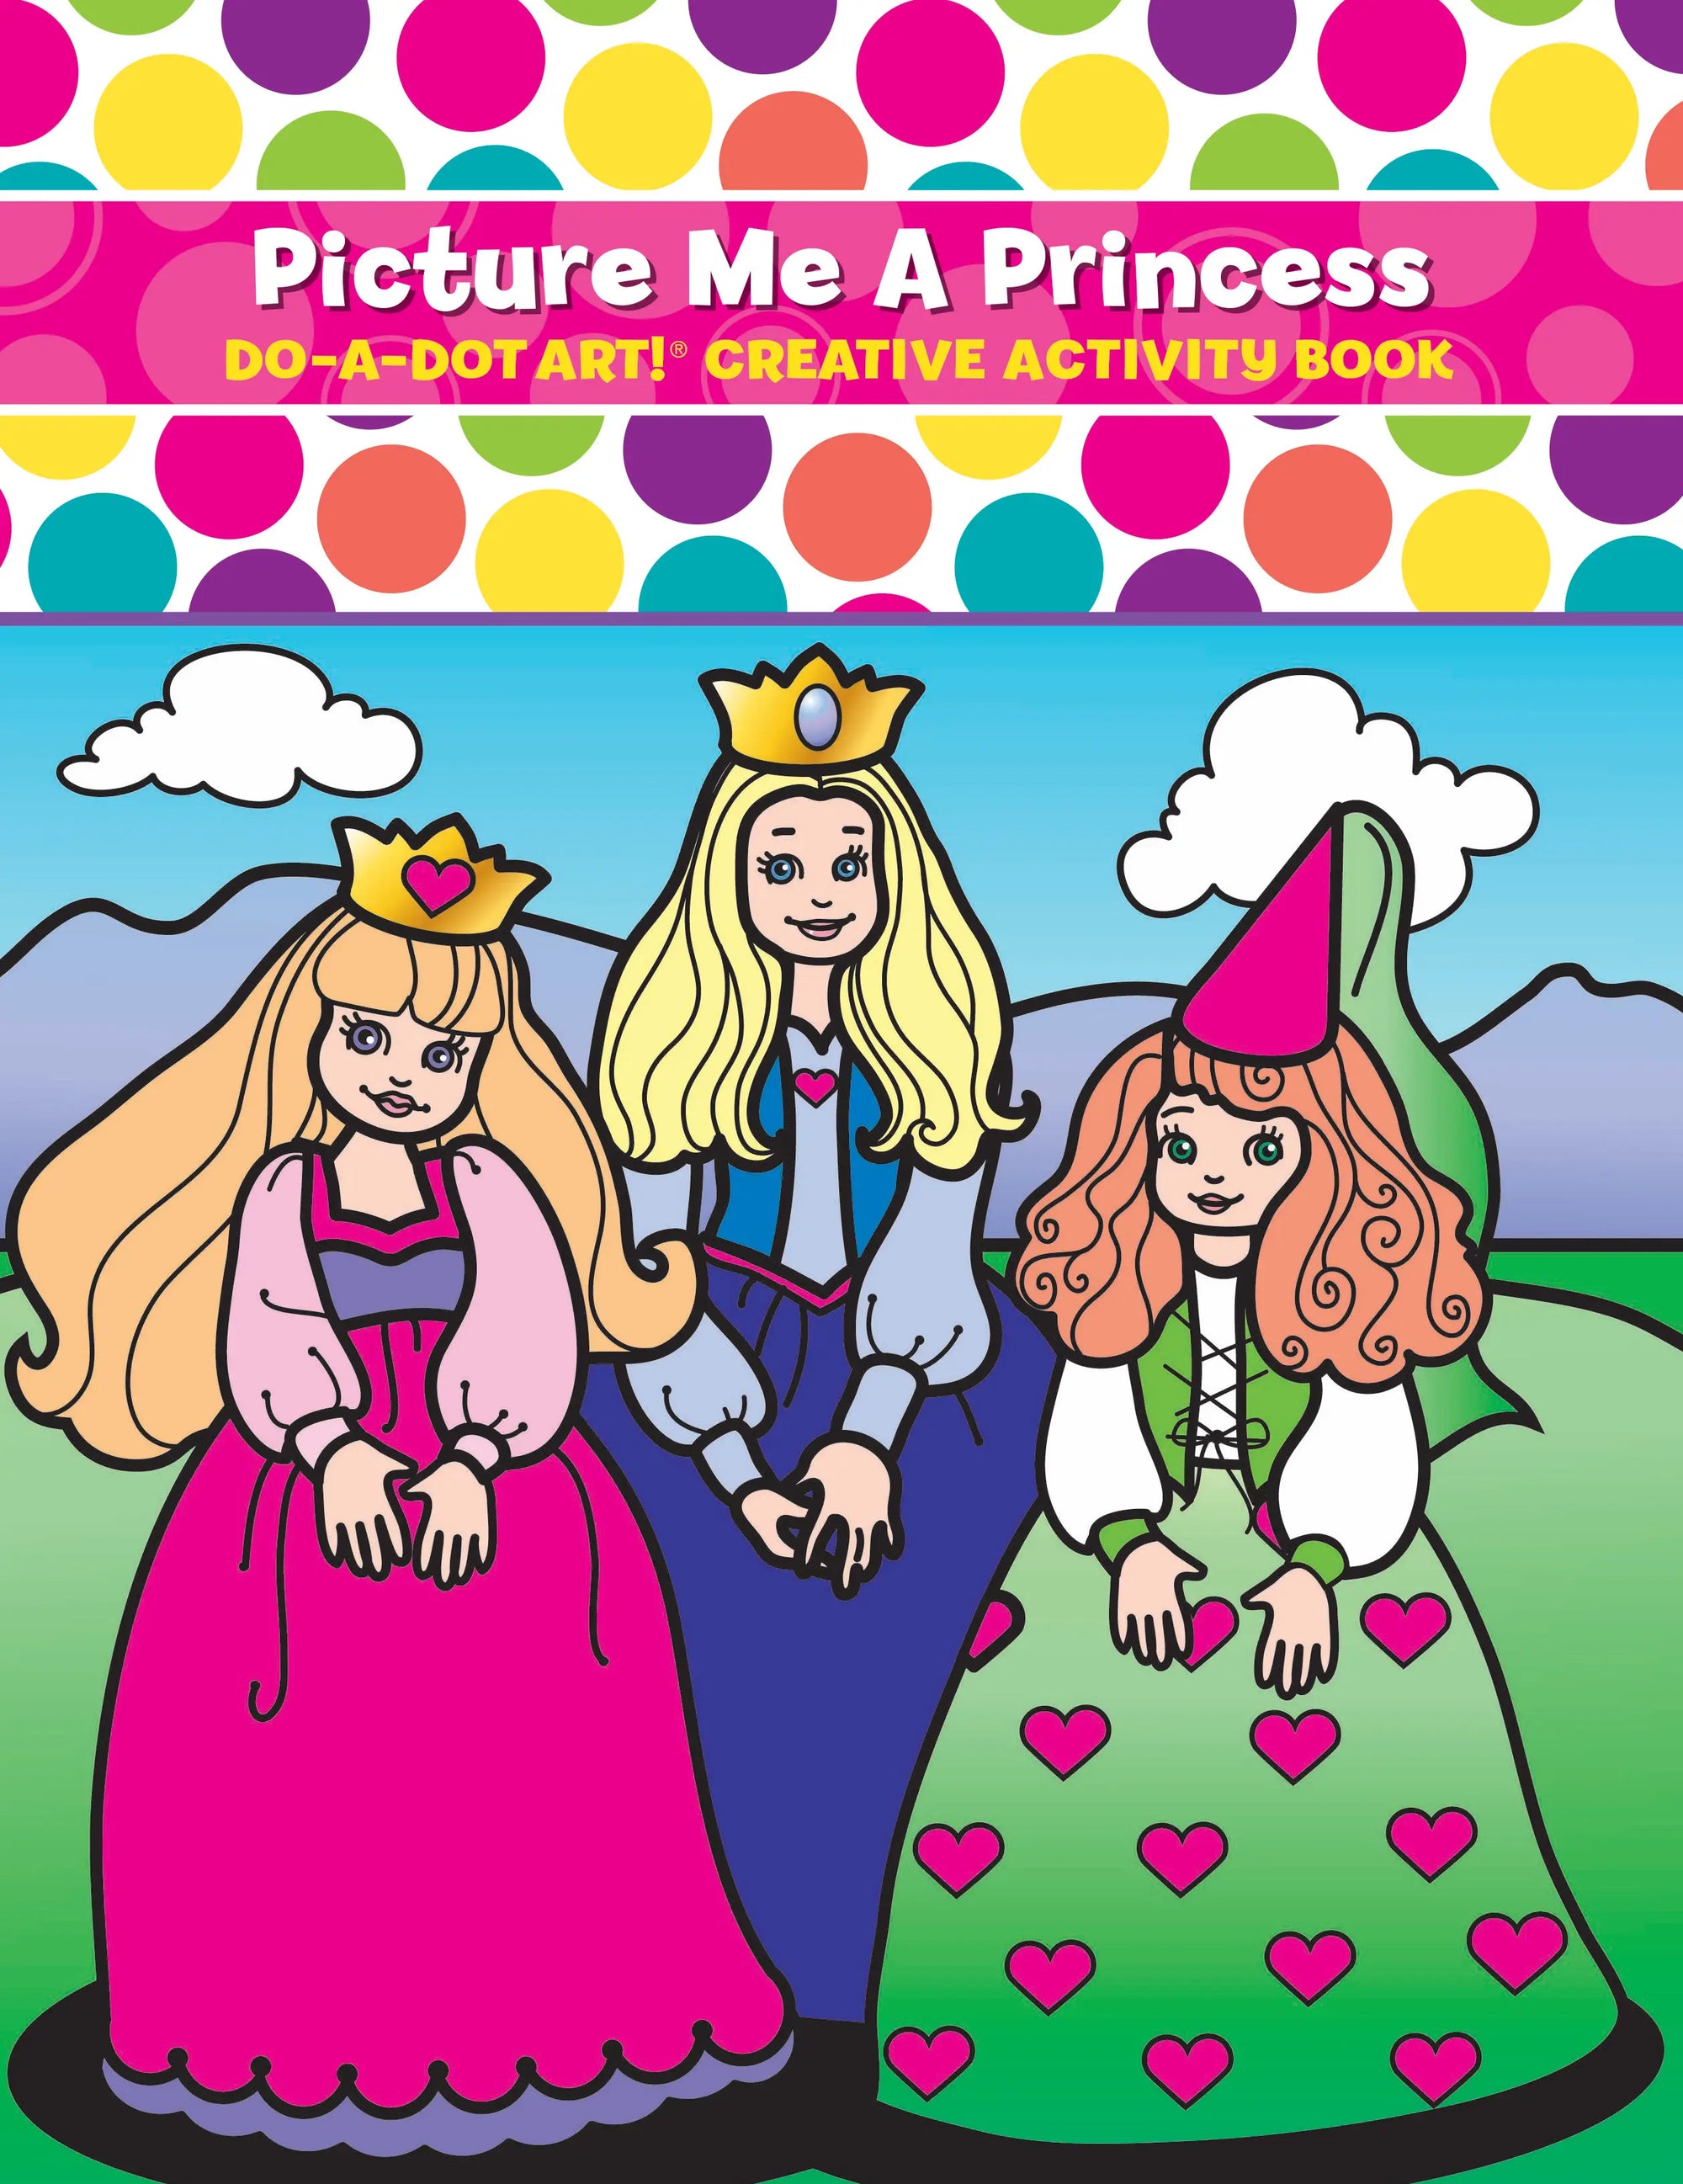 Do-A-Dot Art! Creative Activity Book / Picture Me A Princess